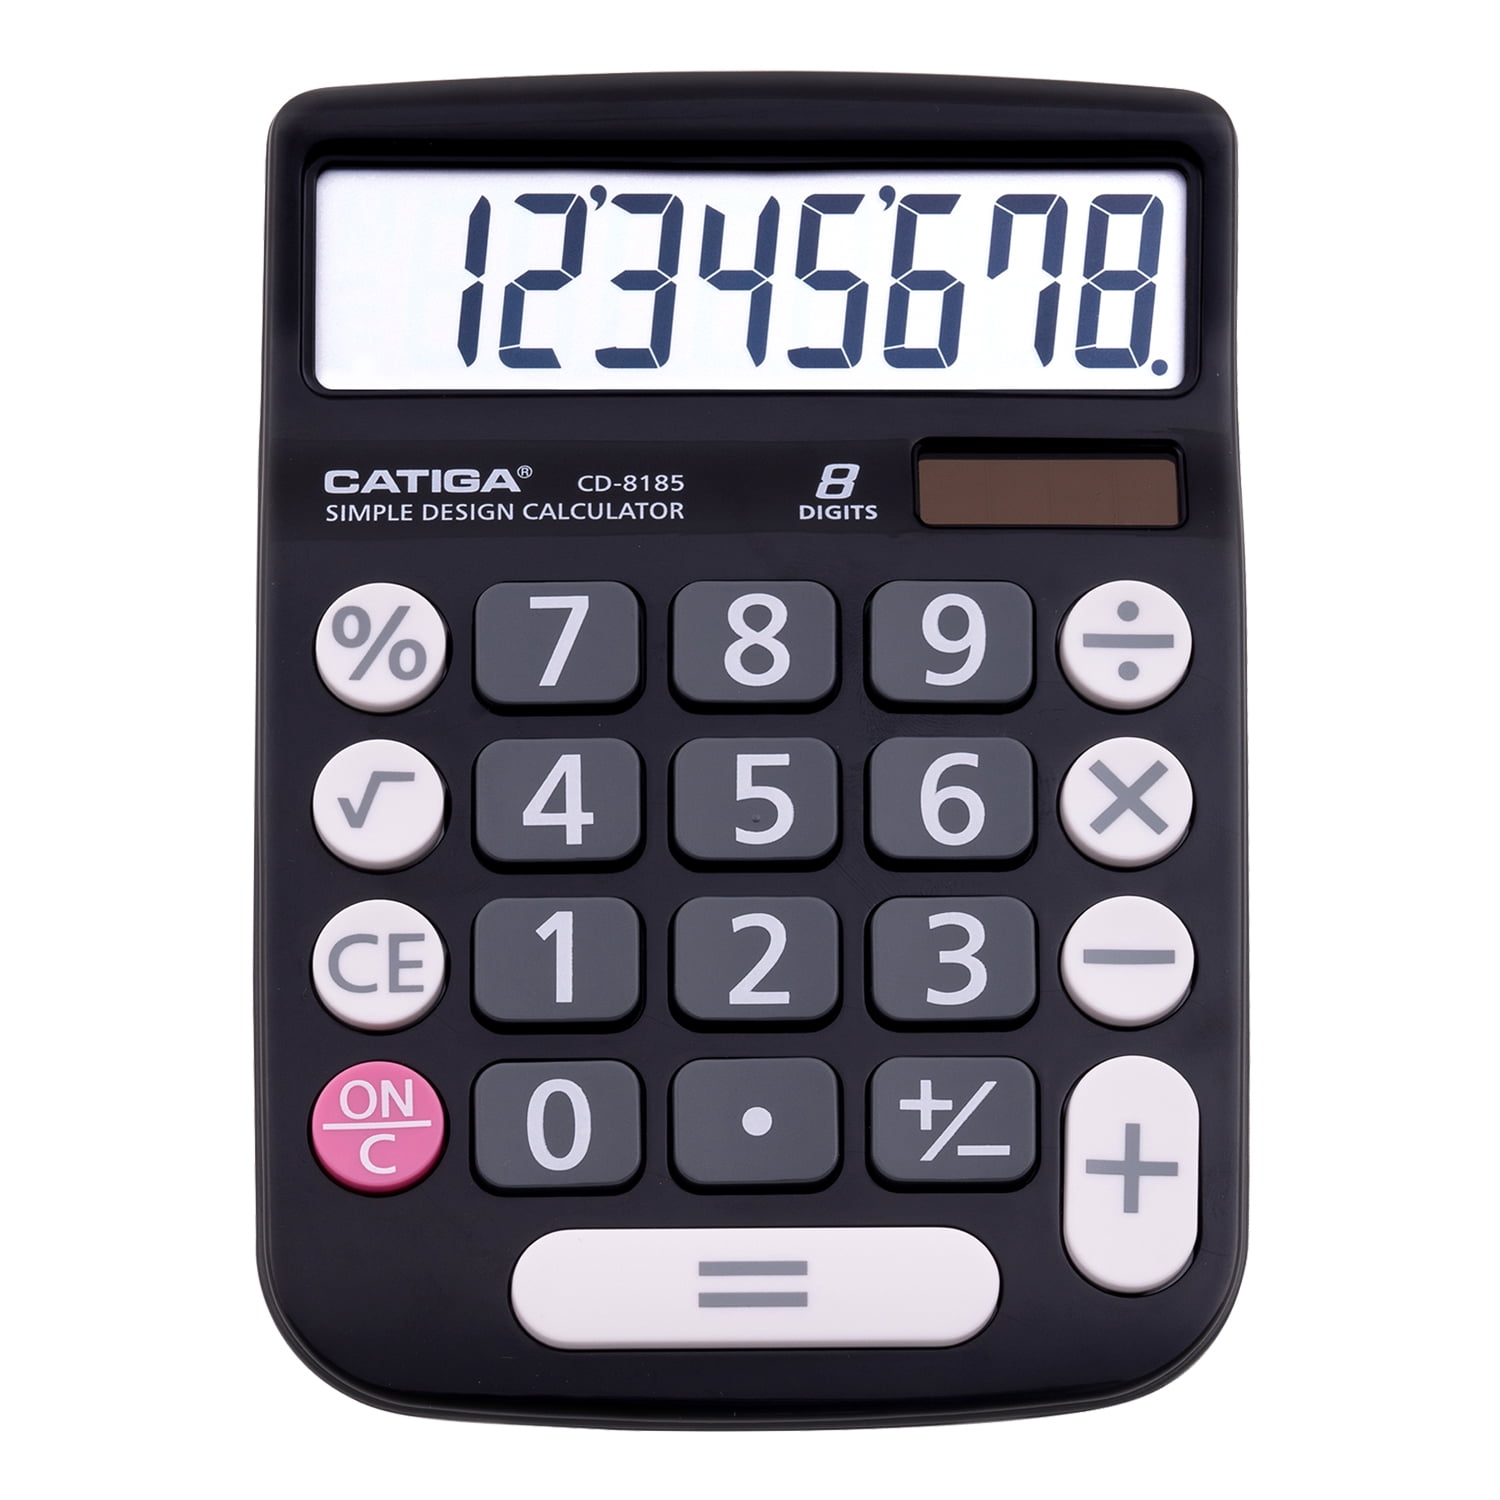 CATIGA CD-2786 Metal Desktop Calculator 12 Digit w/ Extra Large